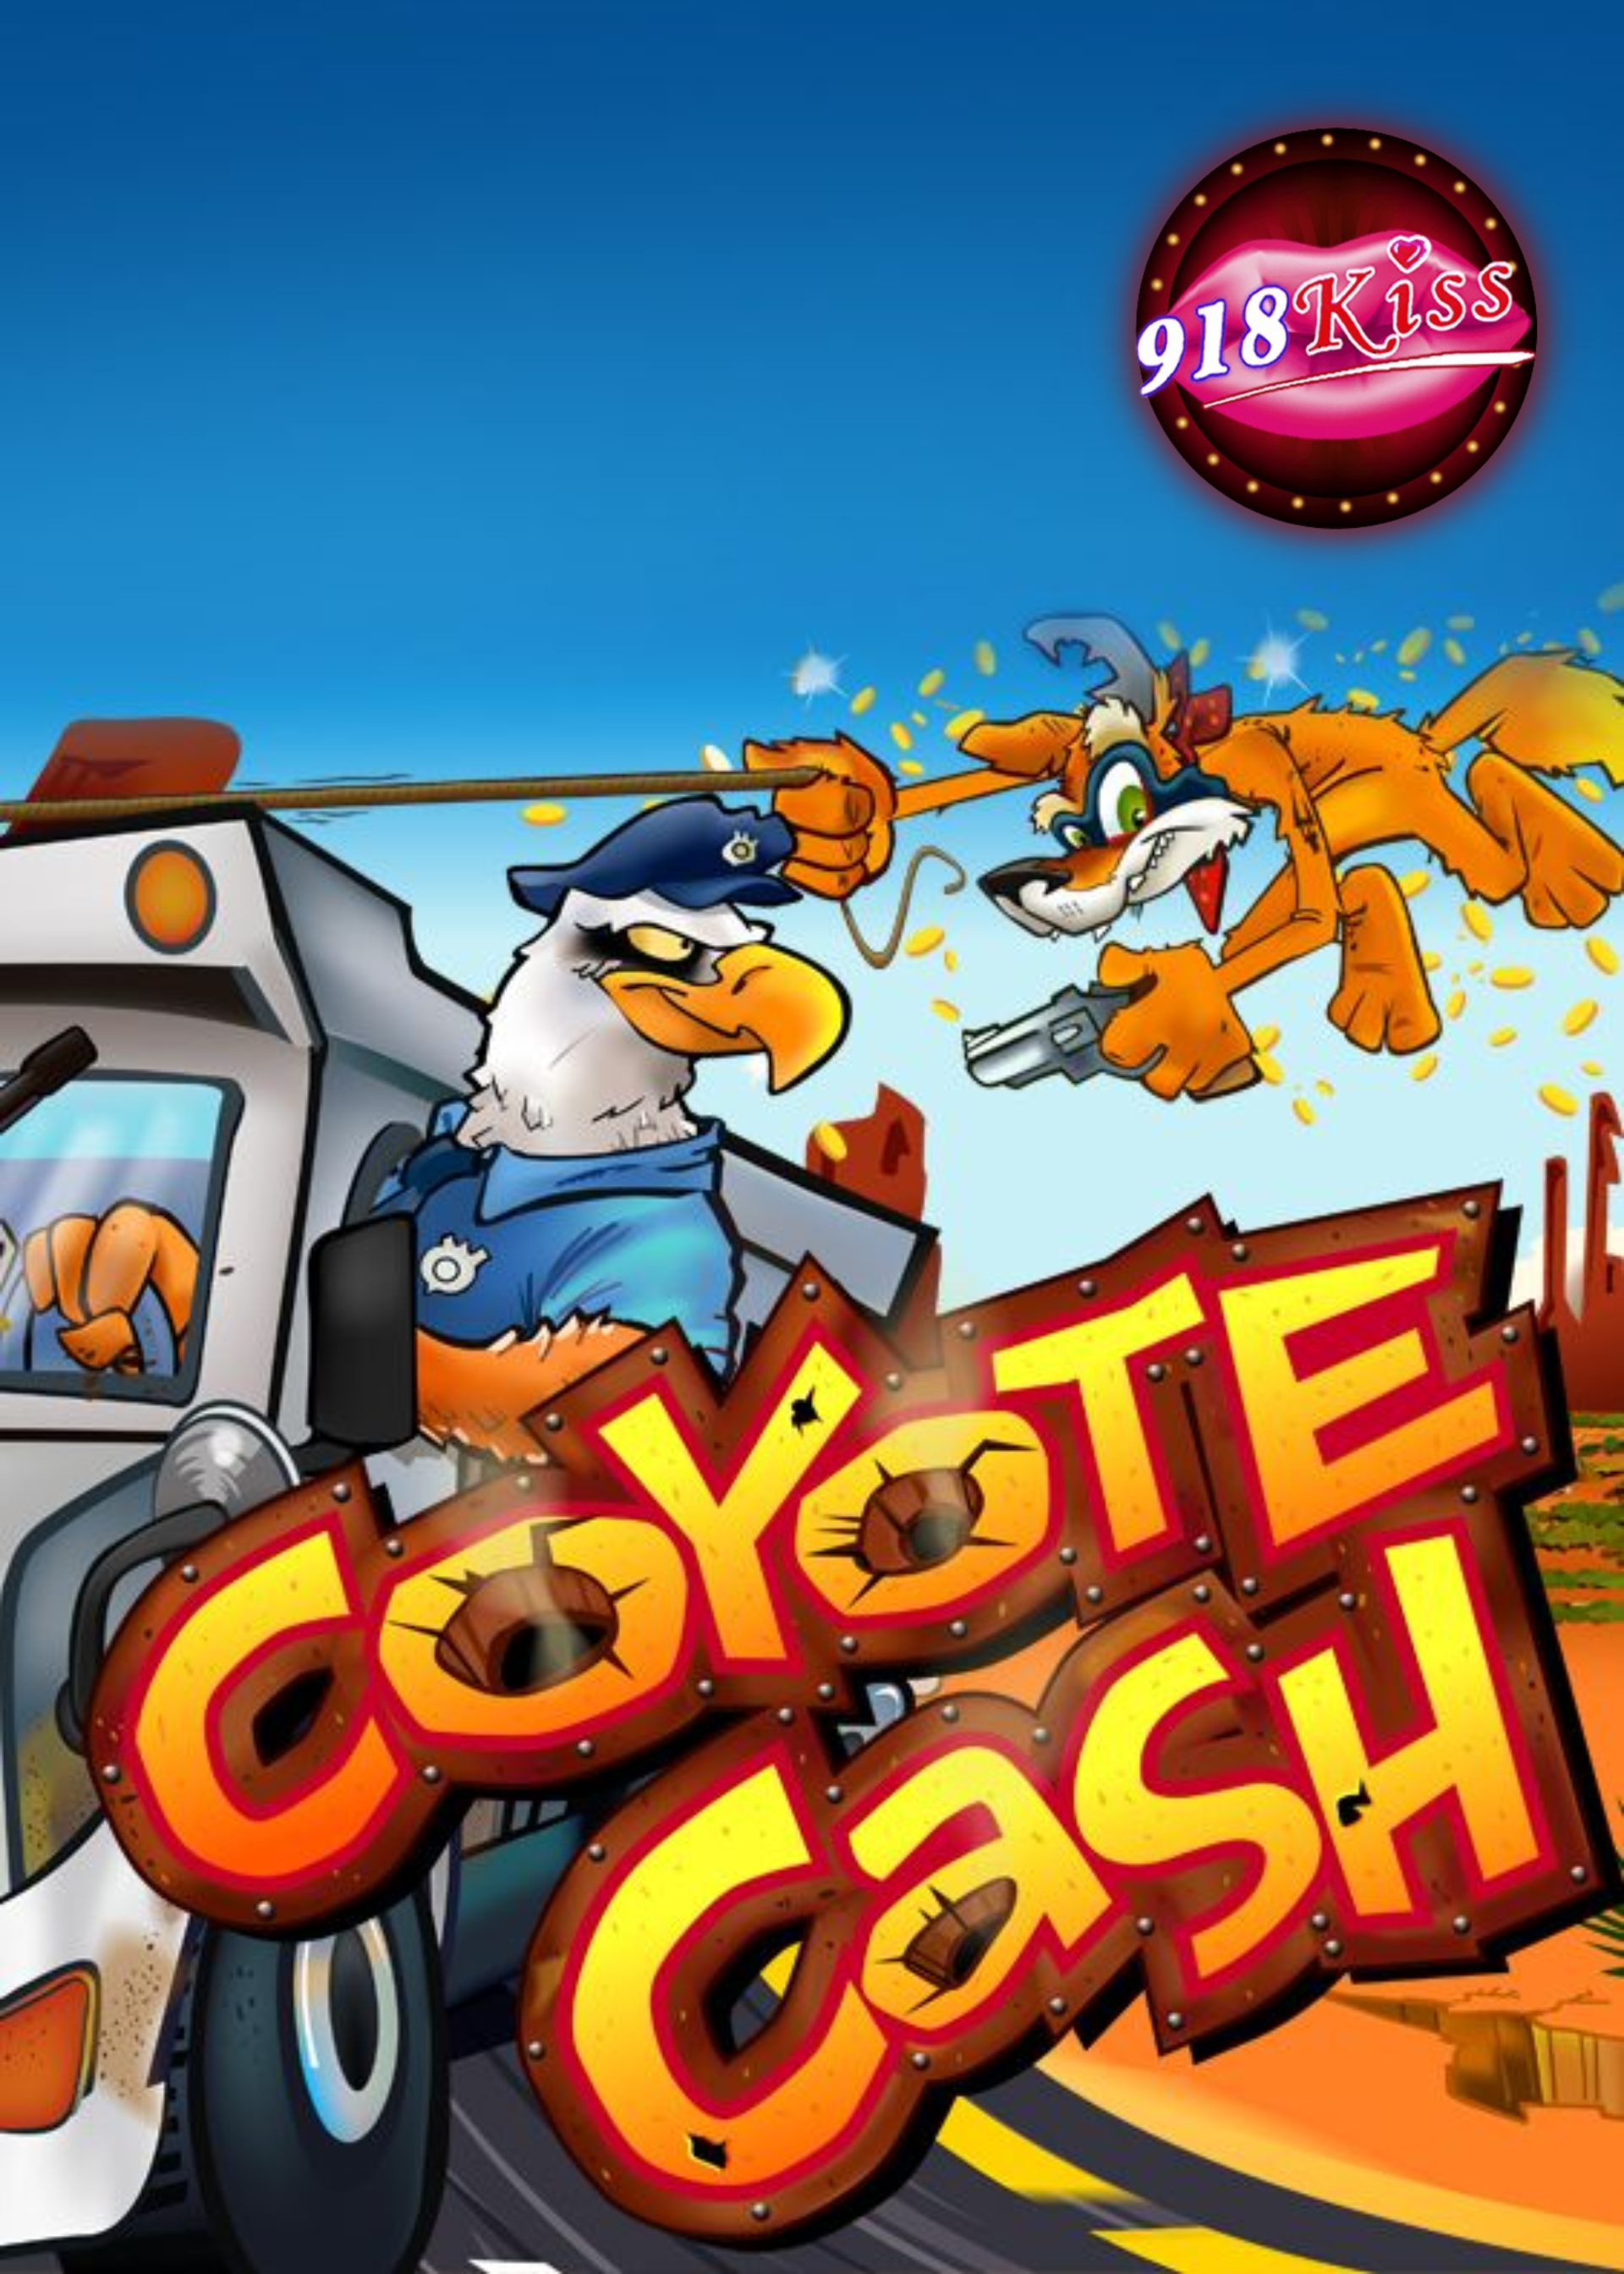 Coyote Cash[918Kiss]